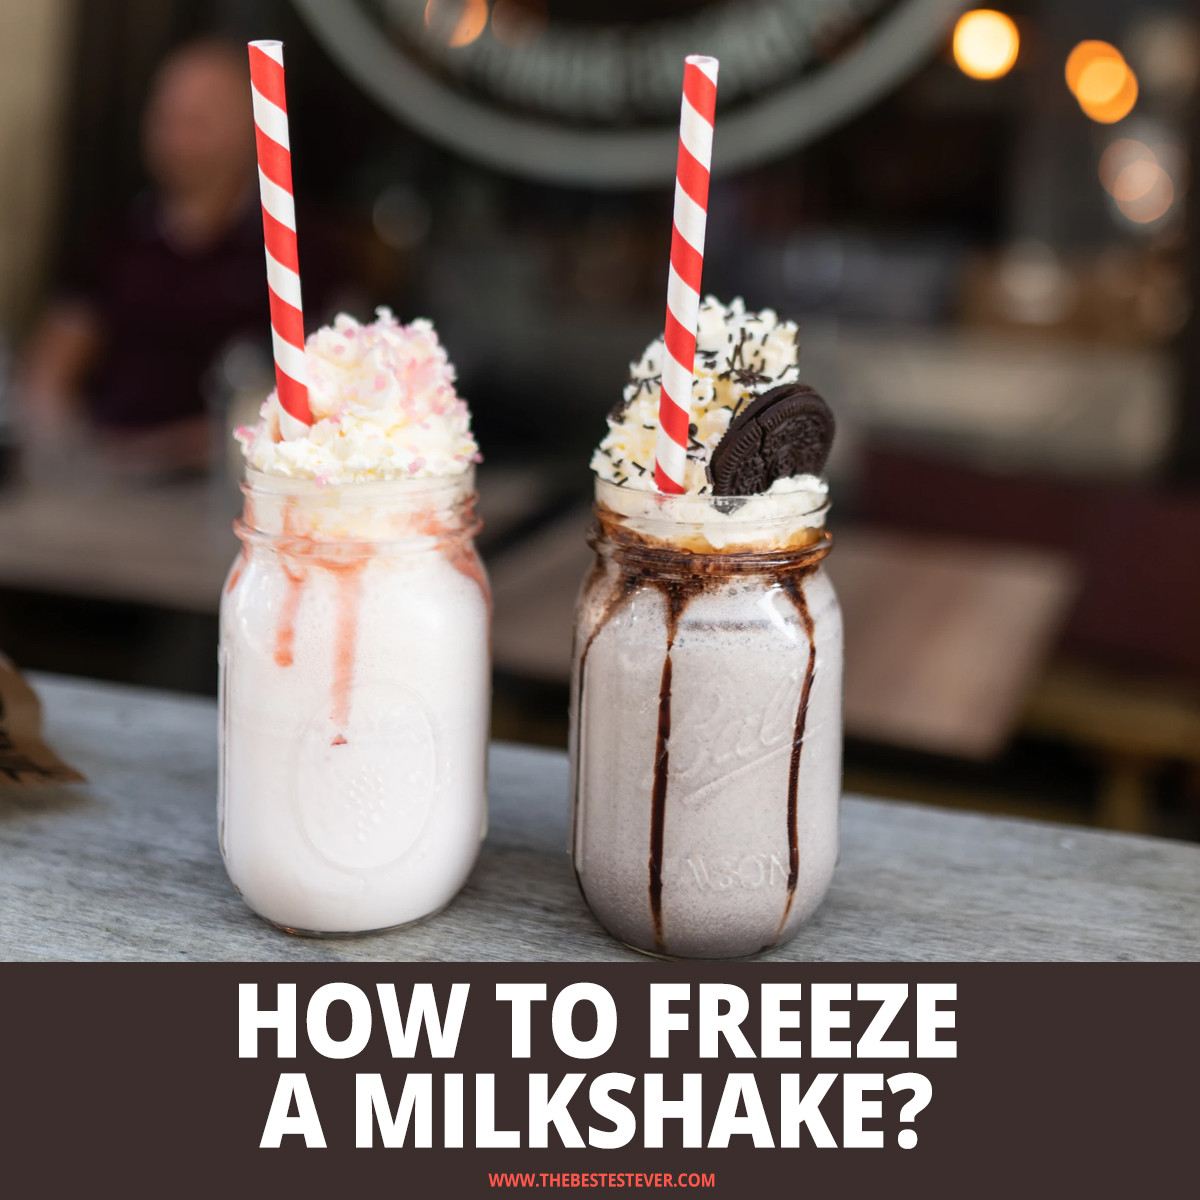 How to Freeze a Milkshake - a Step-by-Step Guide